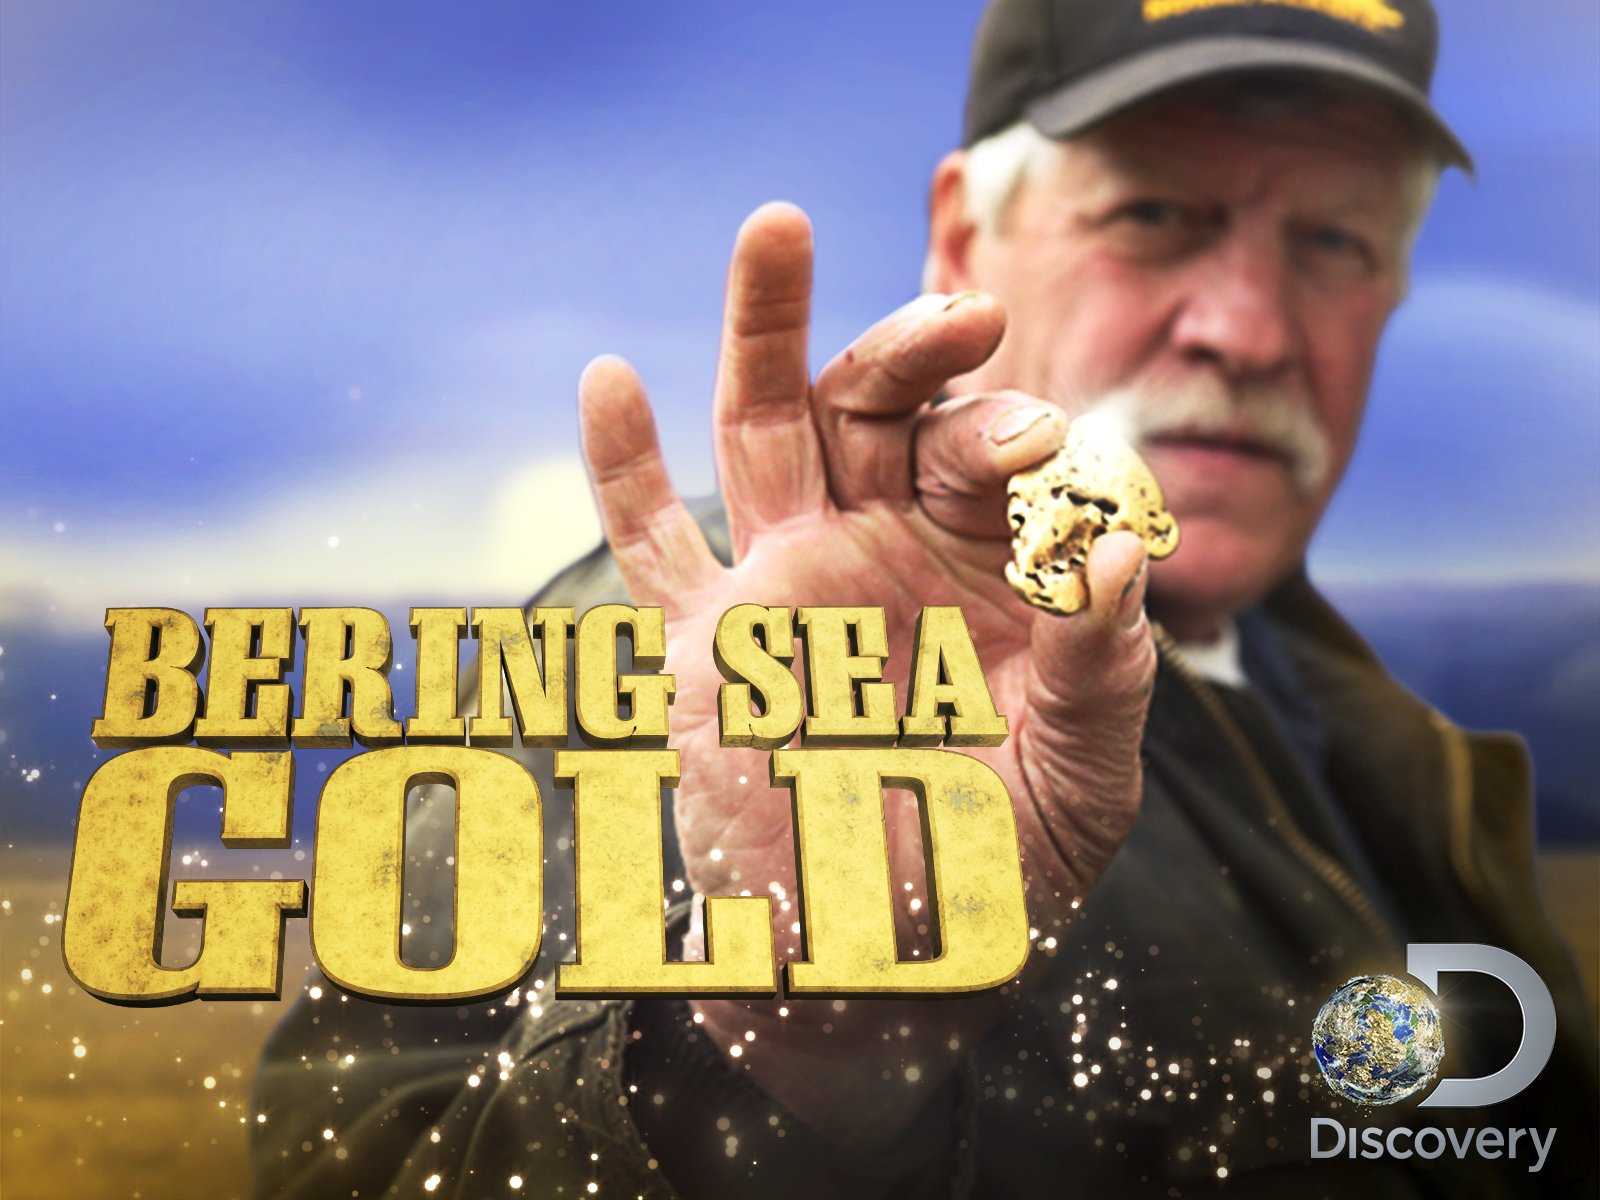 Is Bering Sea Gold new season returning in 2019?